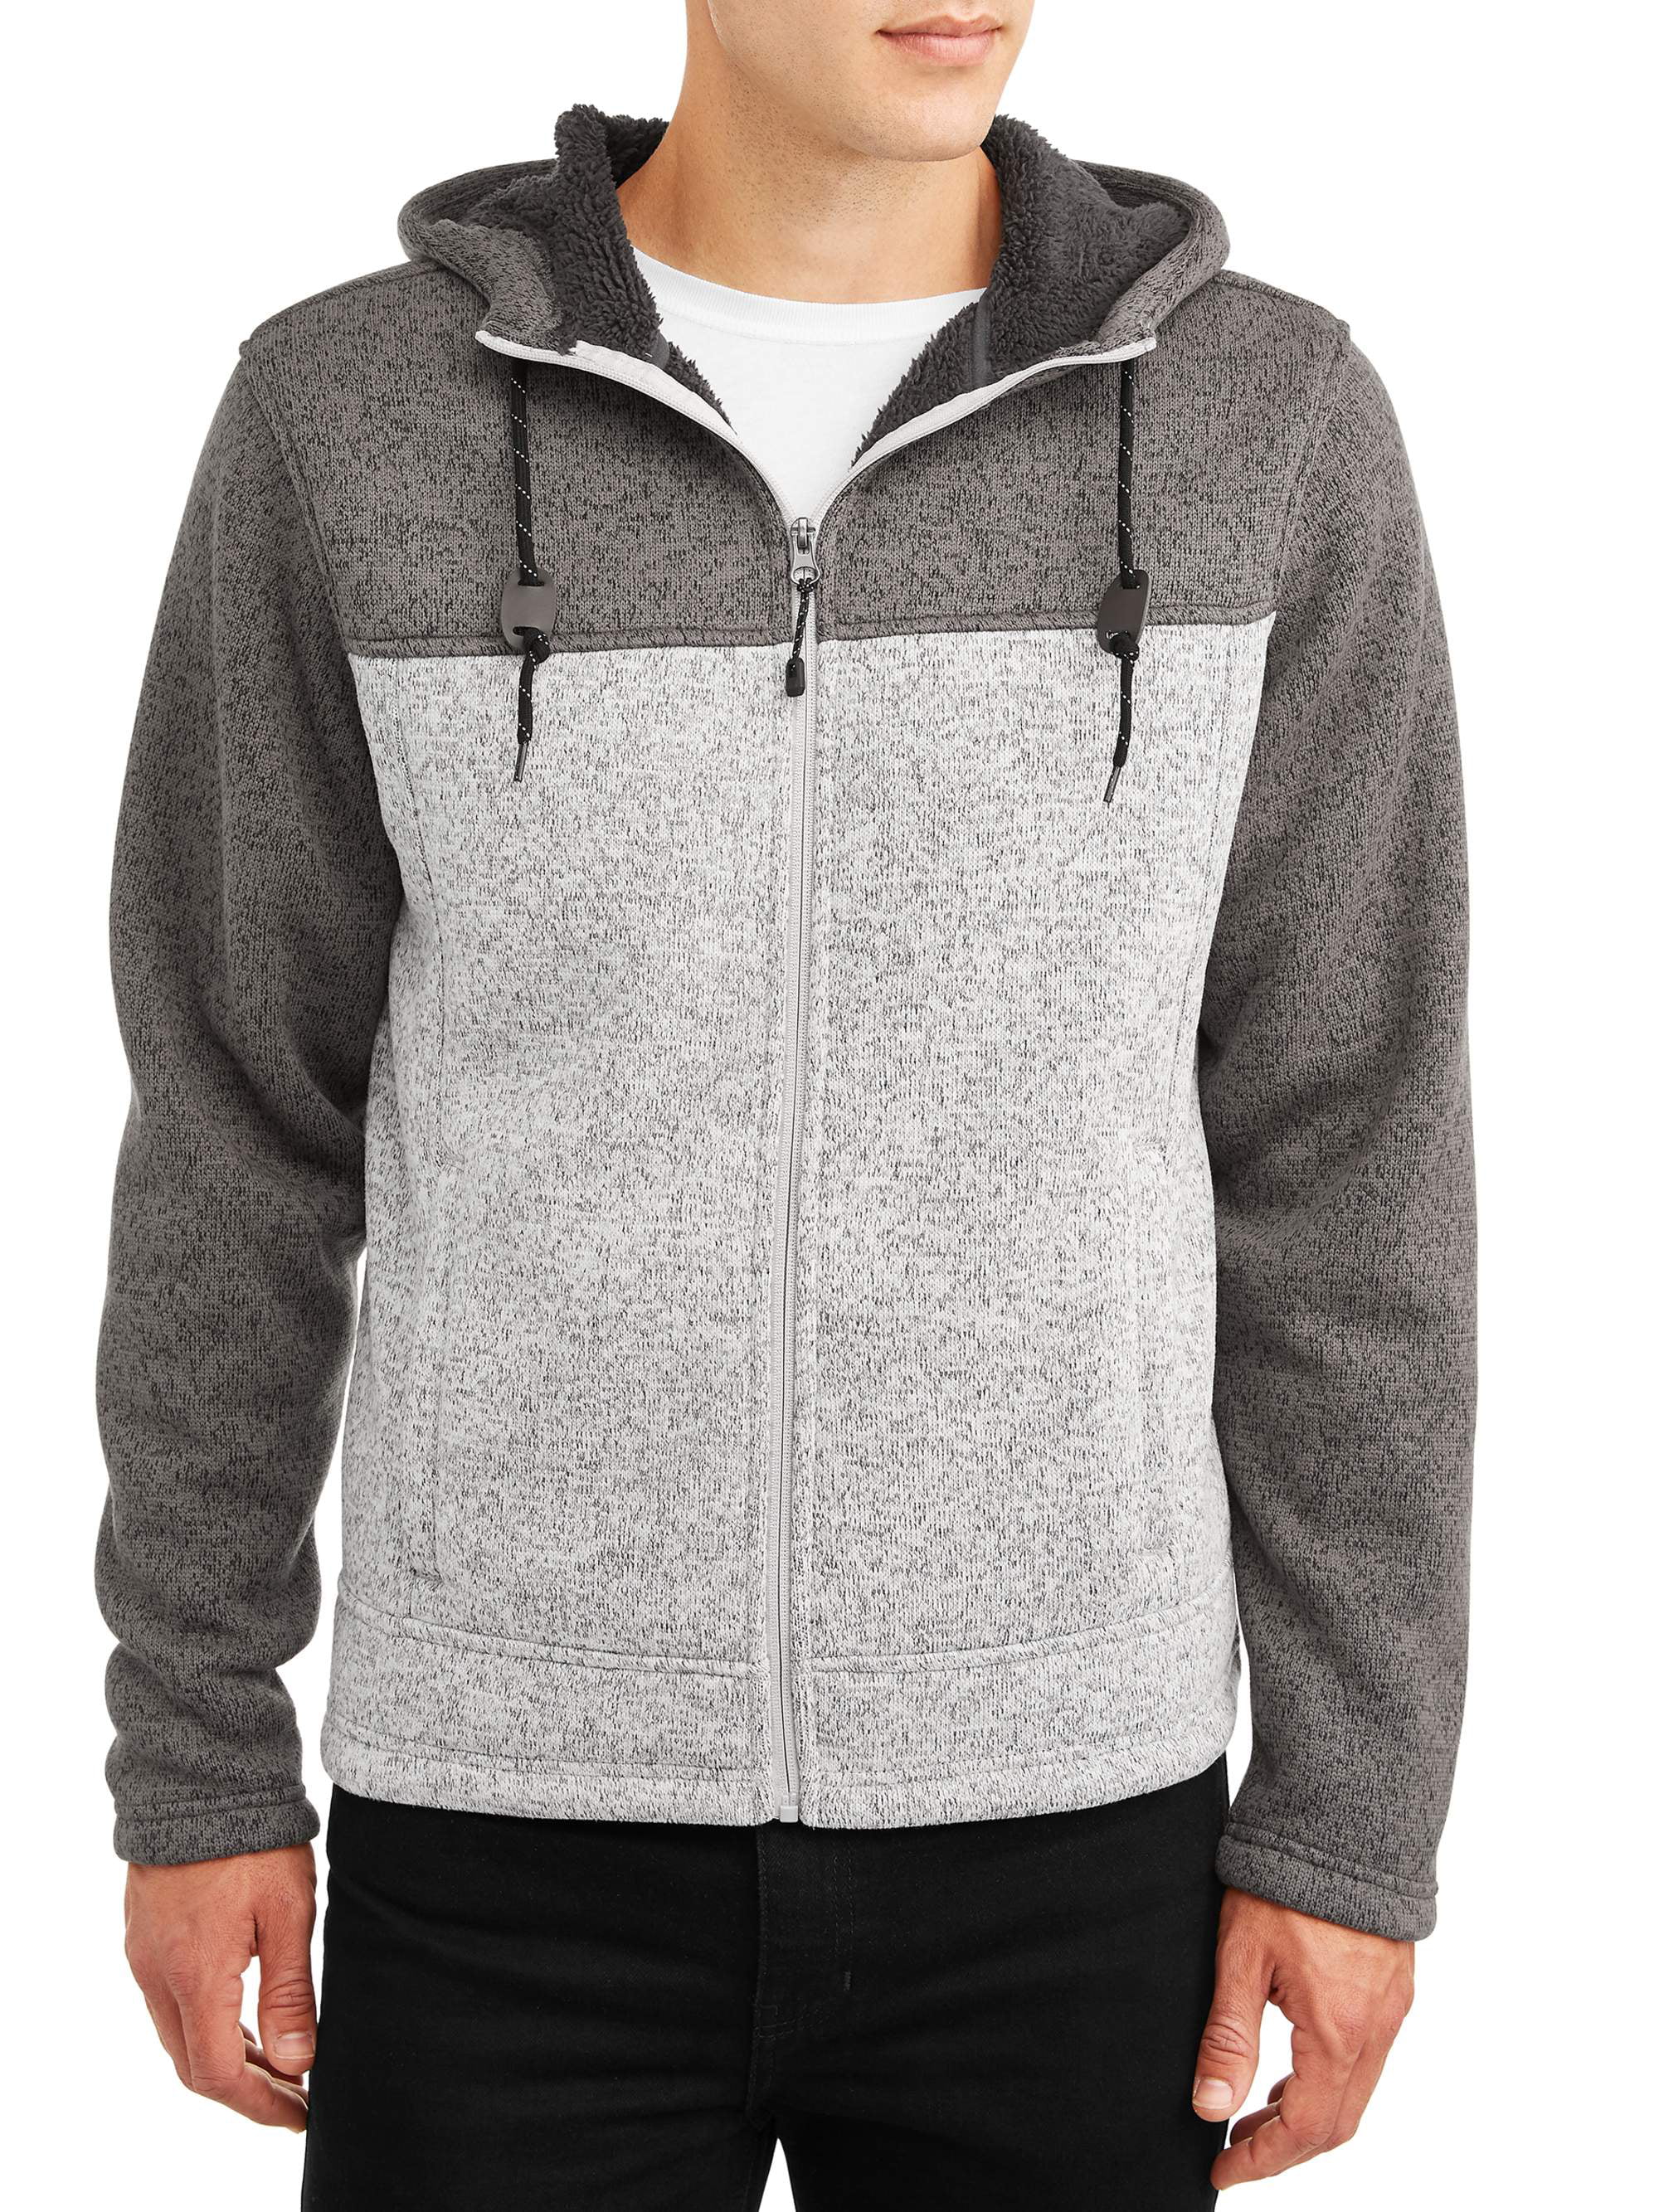 GEORGE - George Men's Full Zip Sherpa Sweater Fleece, up to Size 5XL ...